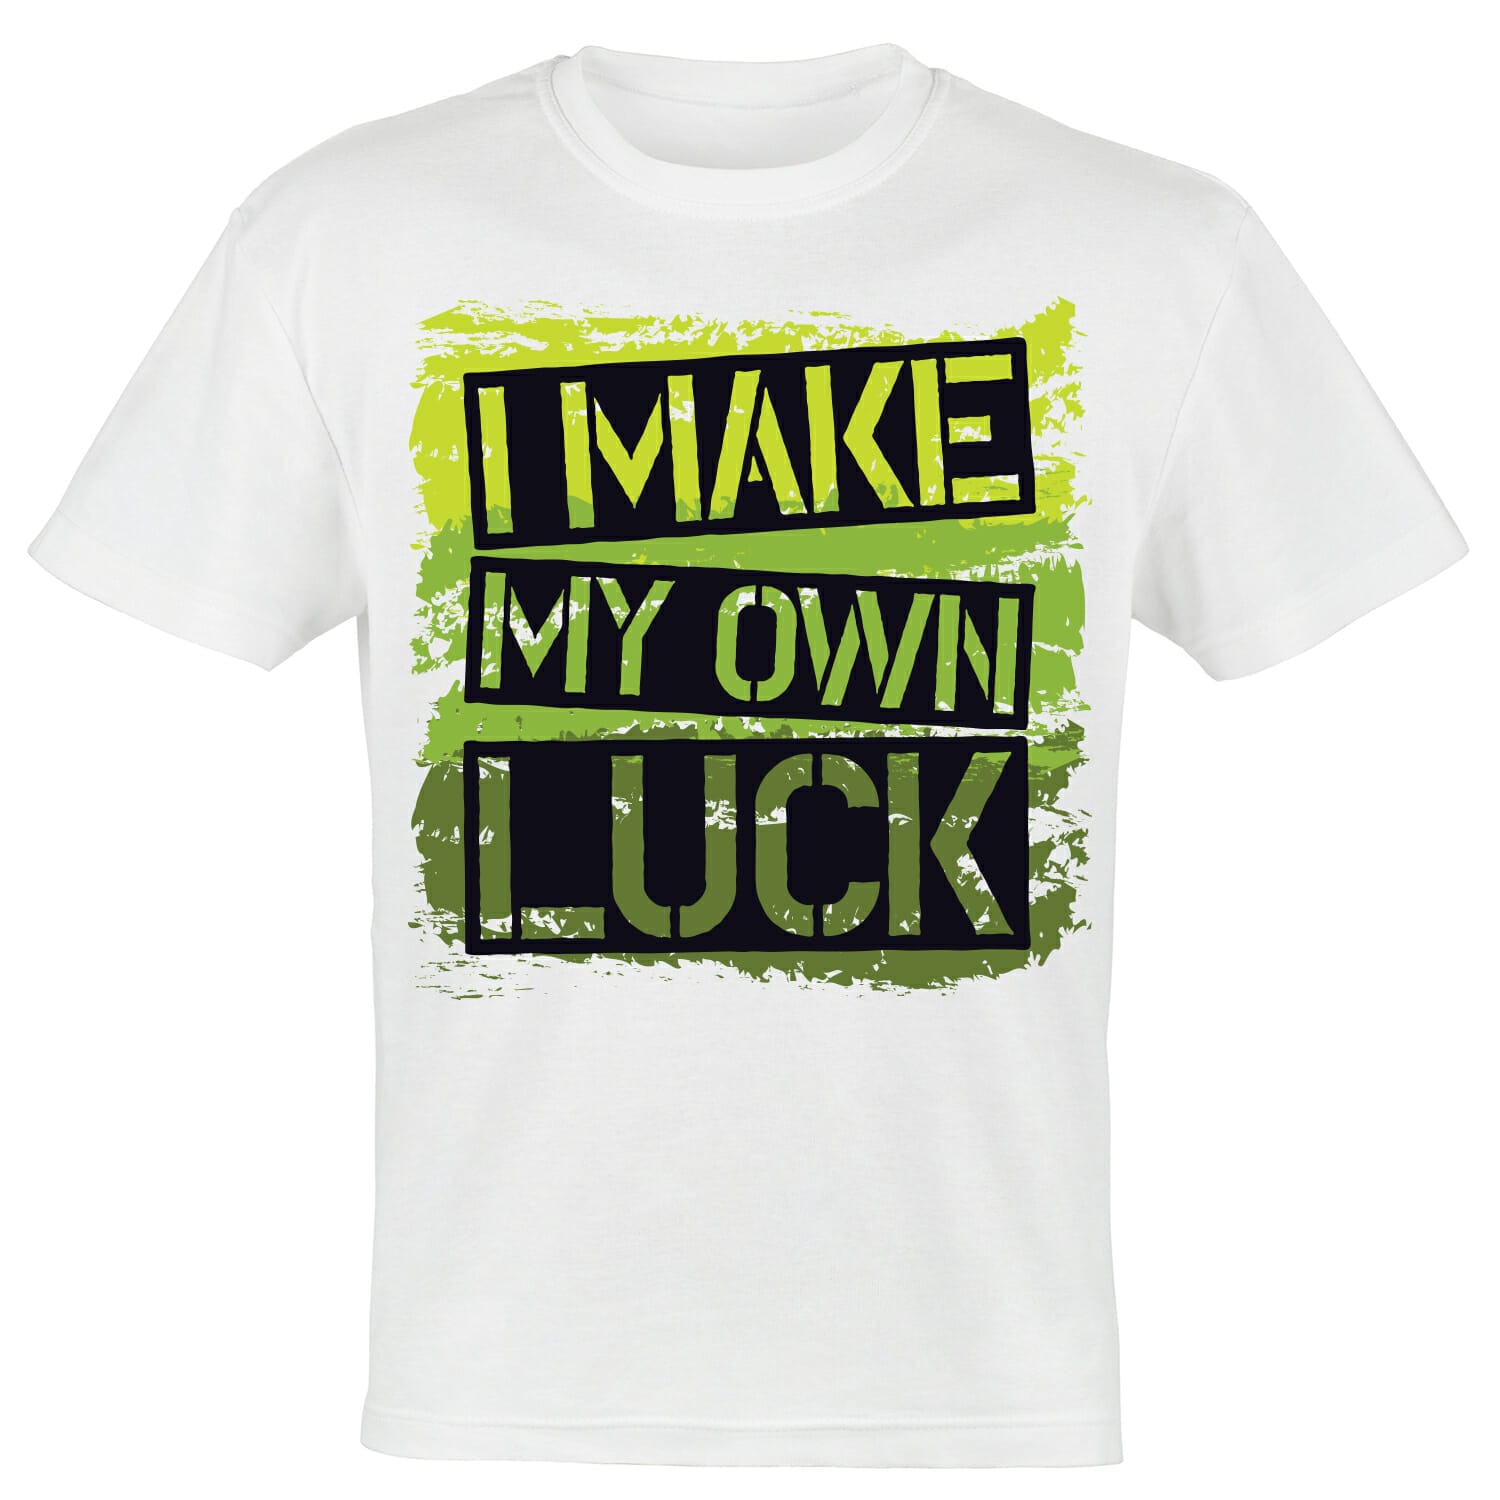 I make my own luck tshirt design